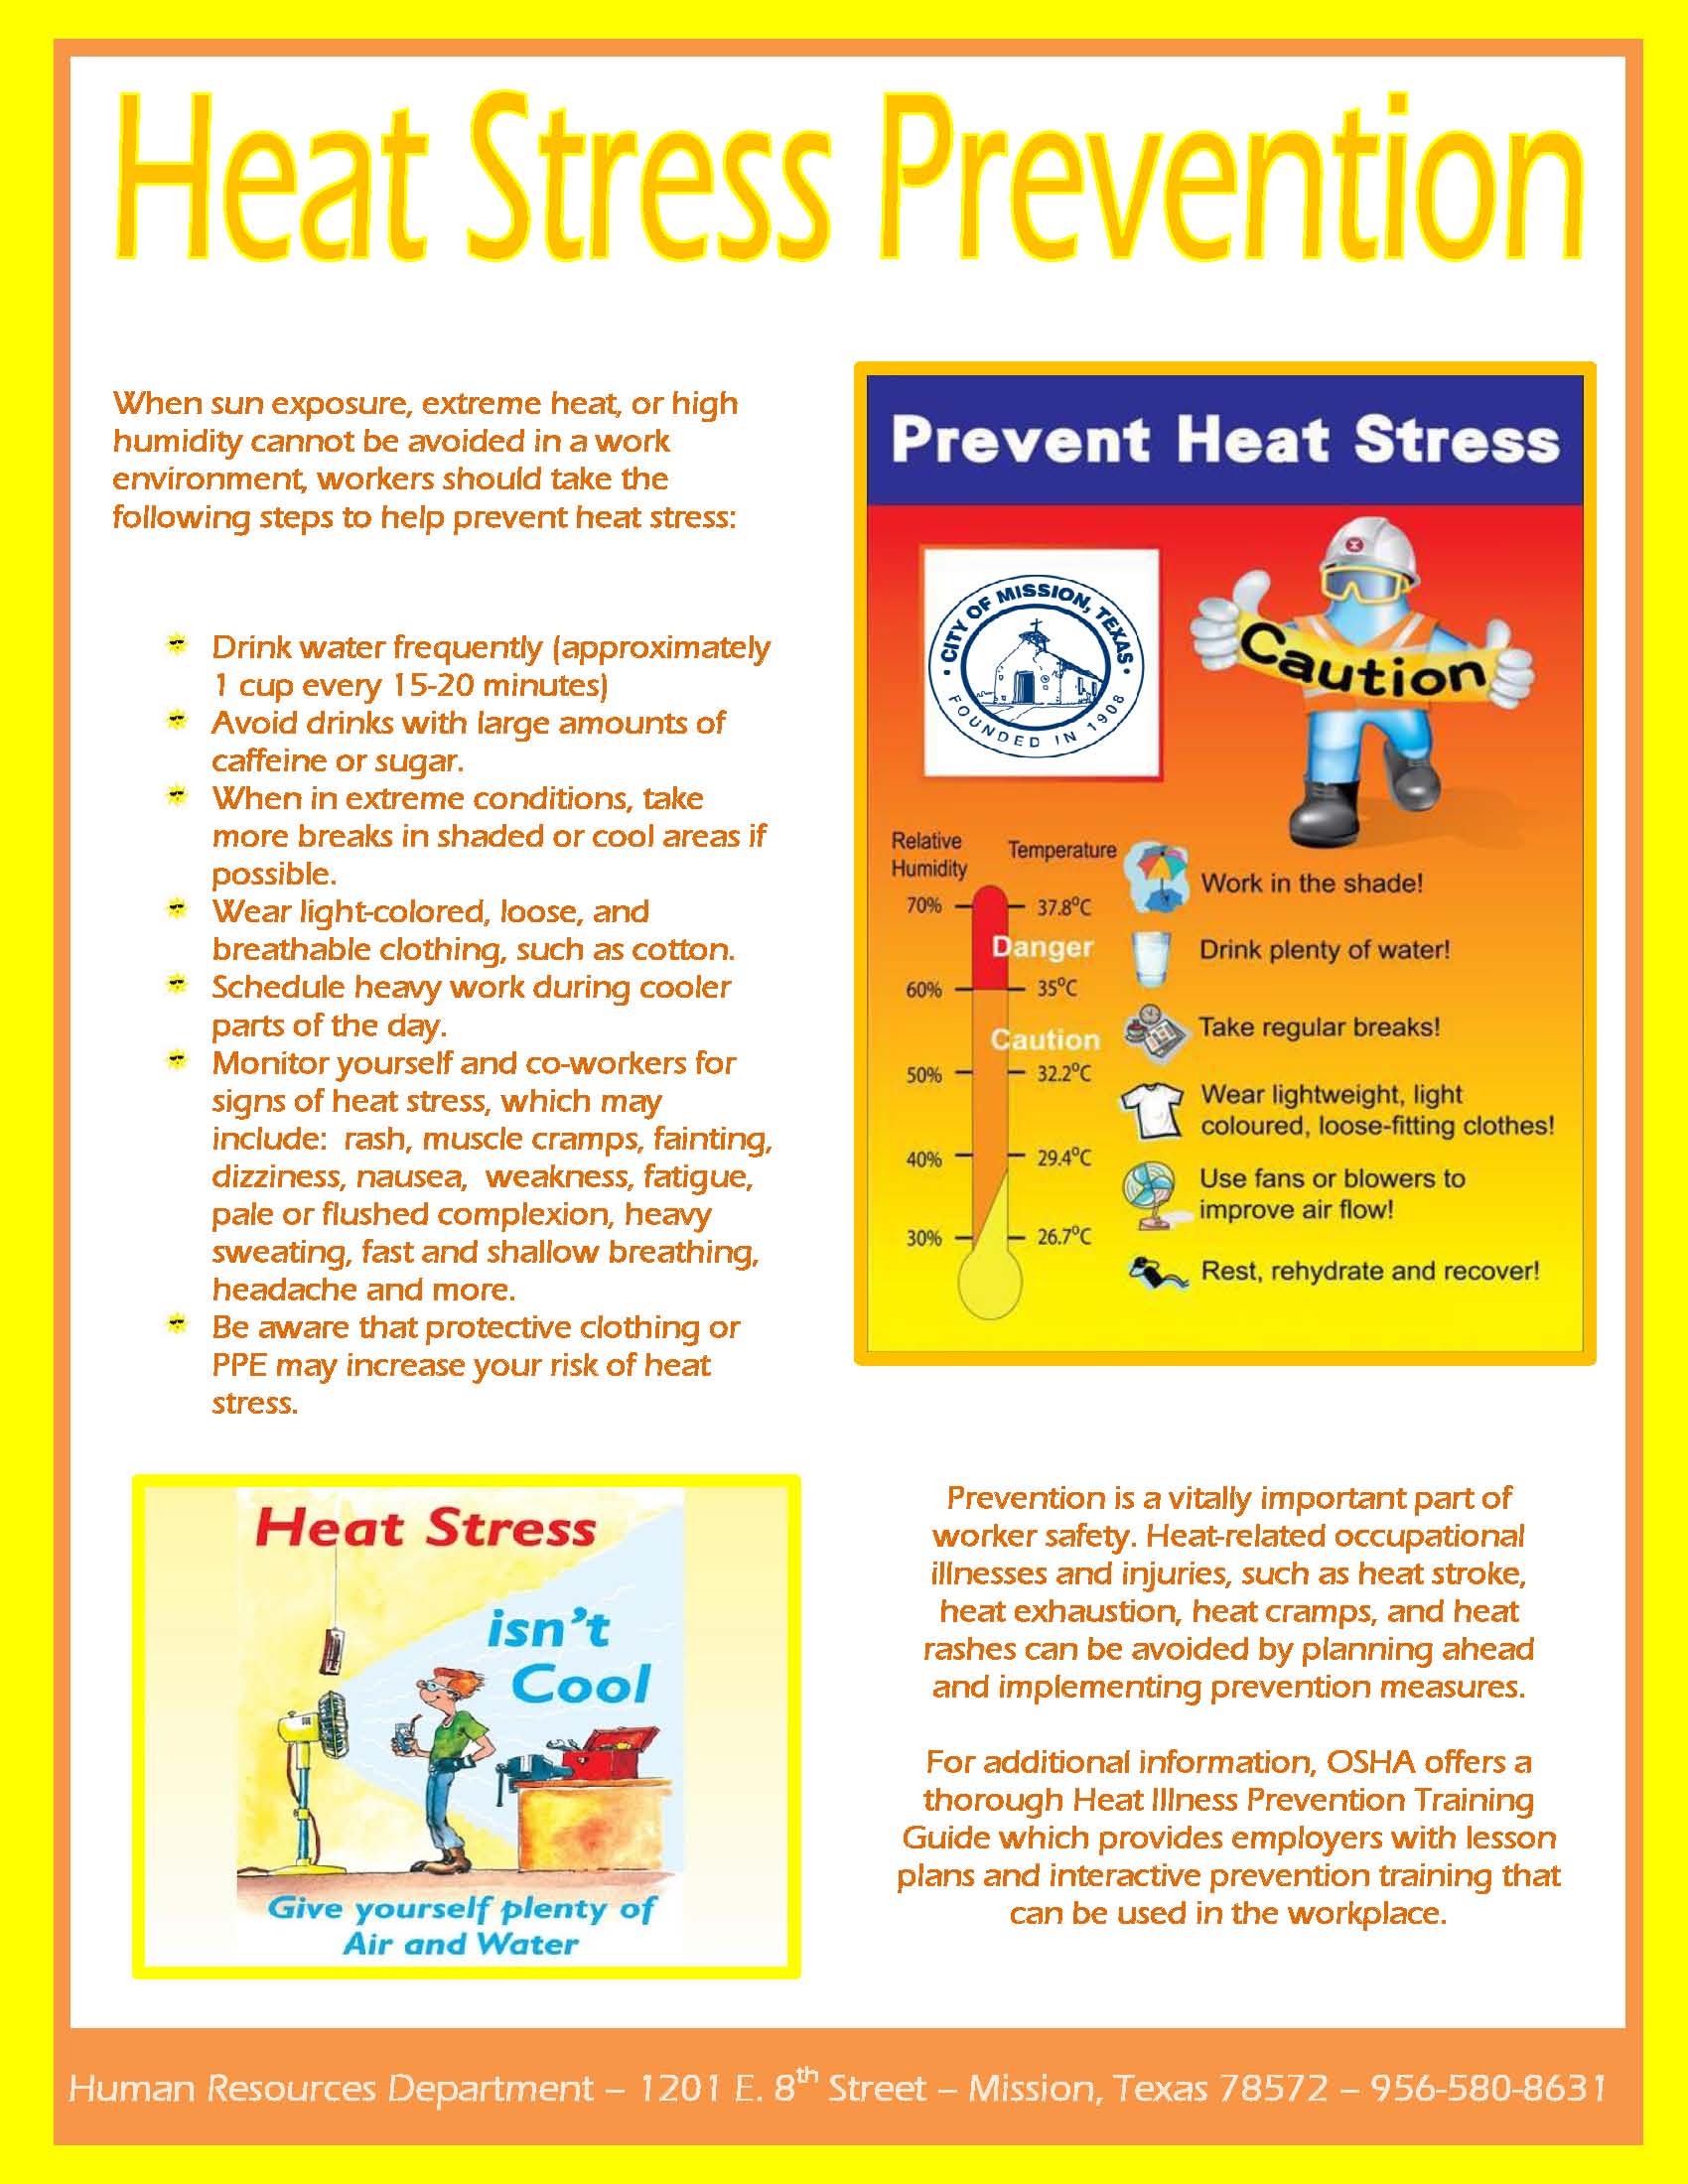 Heat Illness Prevention Program Template